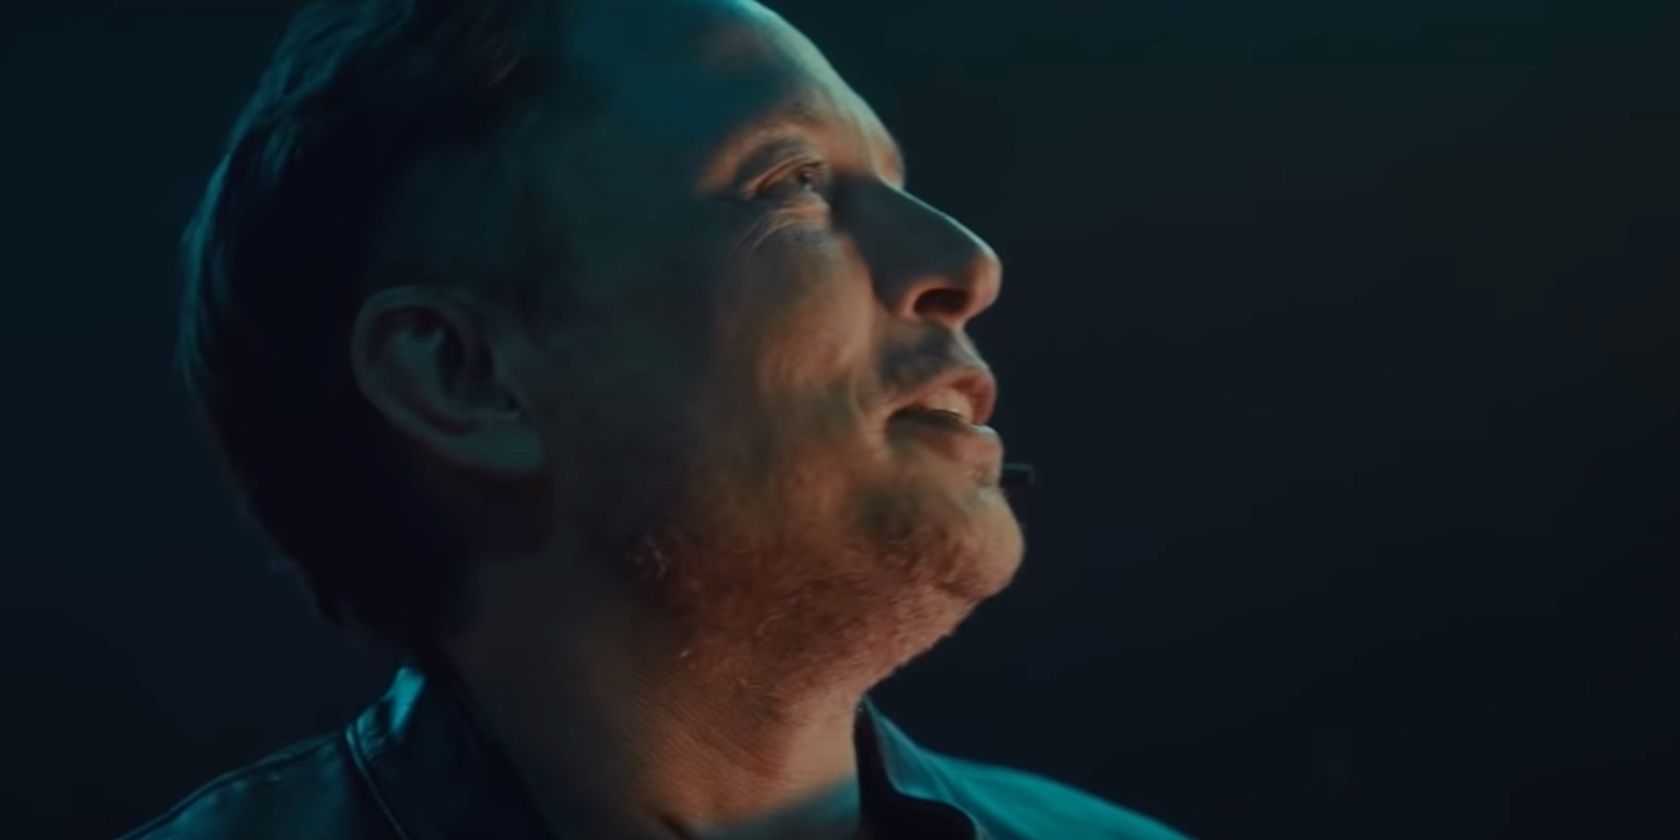 Elon Musk Saturday Night Live appearance